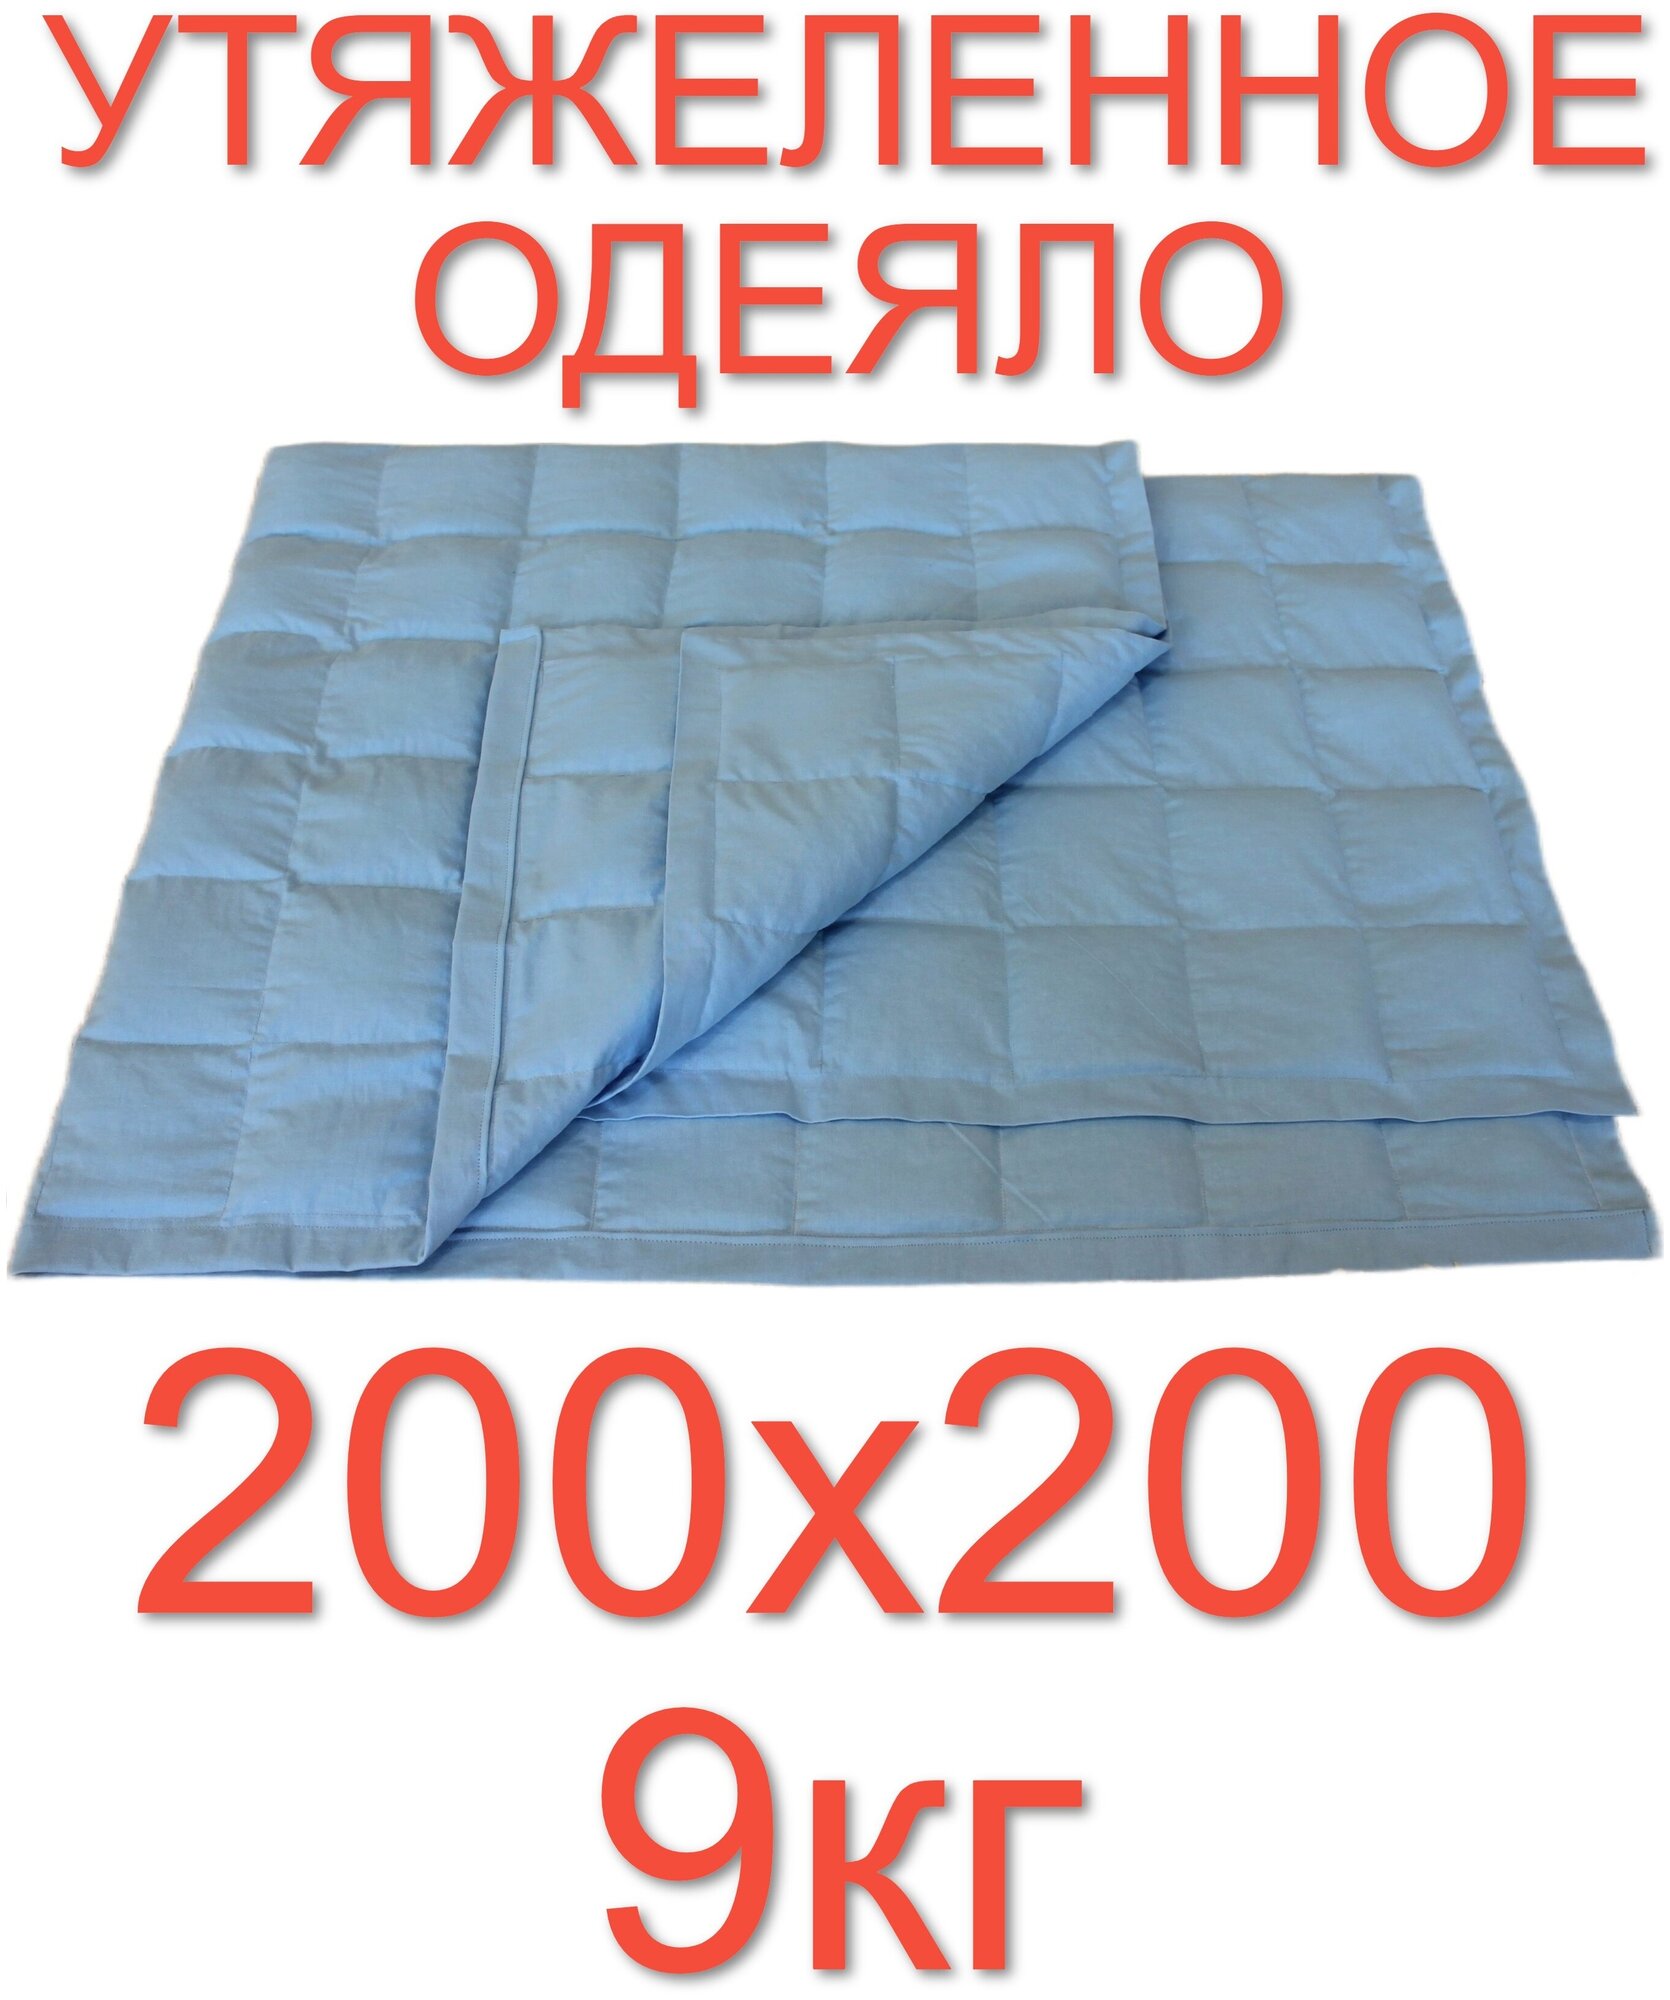 Утяжеленное одеяло 200х200 9 кг, Лайт, OT-STRESSA - фотография № 1